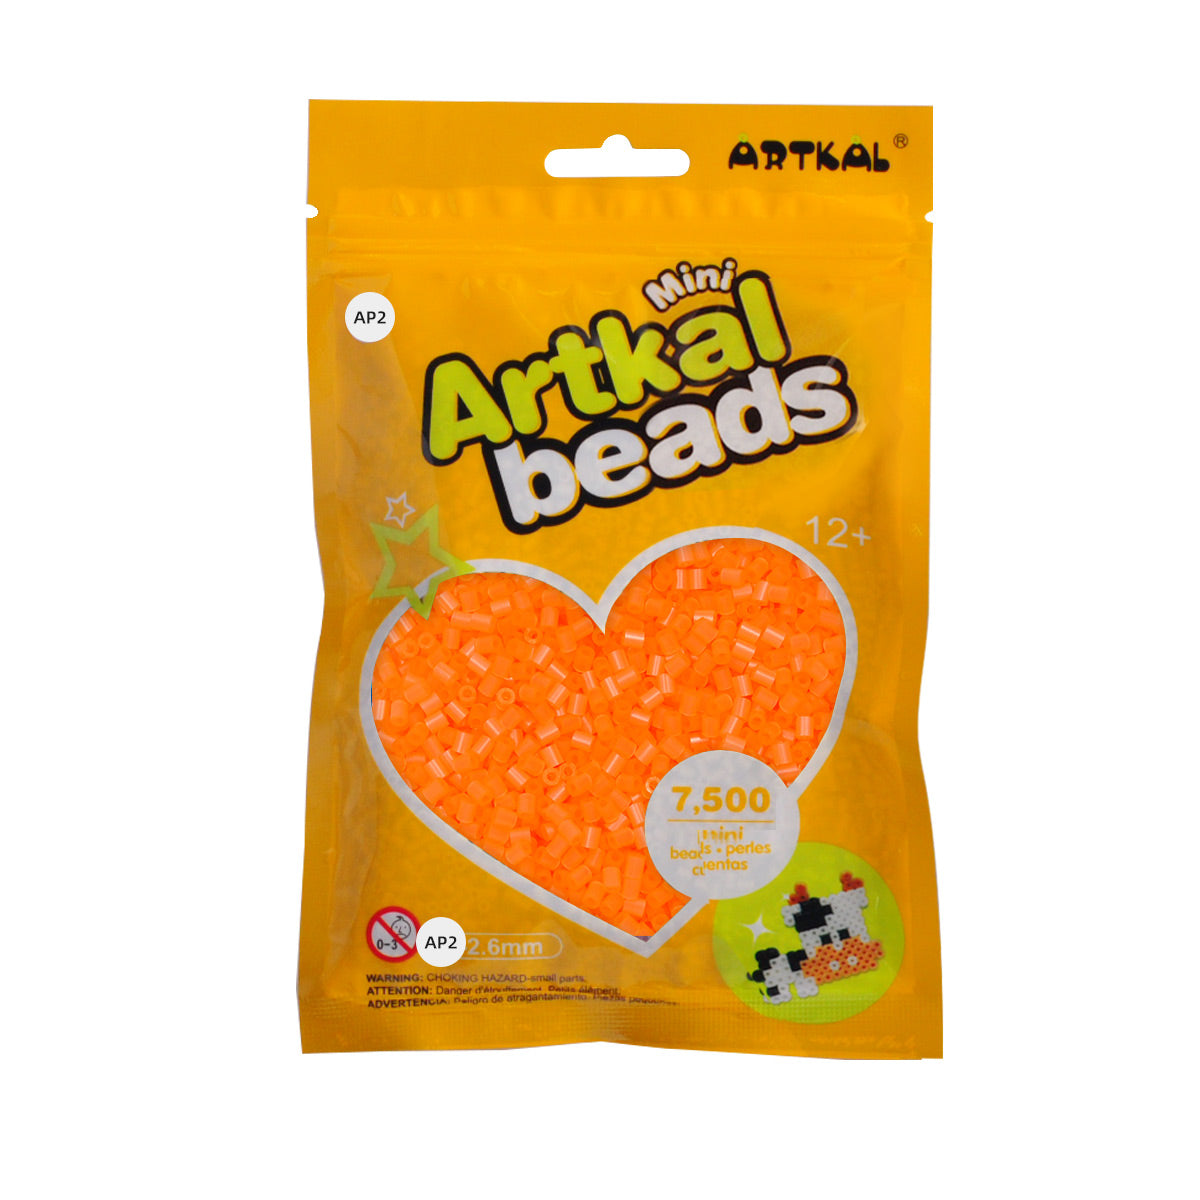 (AP1-AP7) A-2.6mm 7500P single pack mini artkal beads